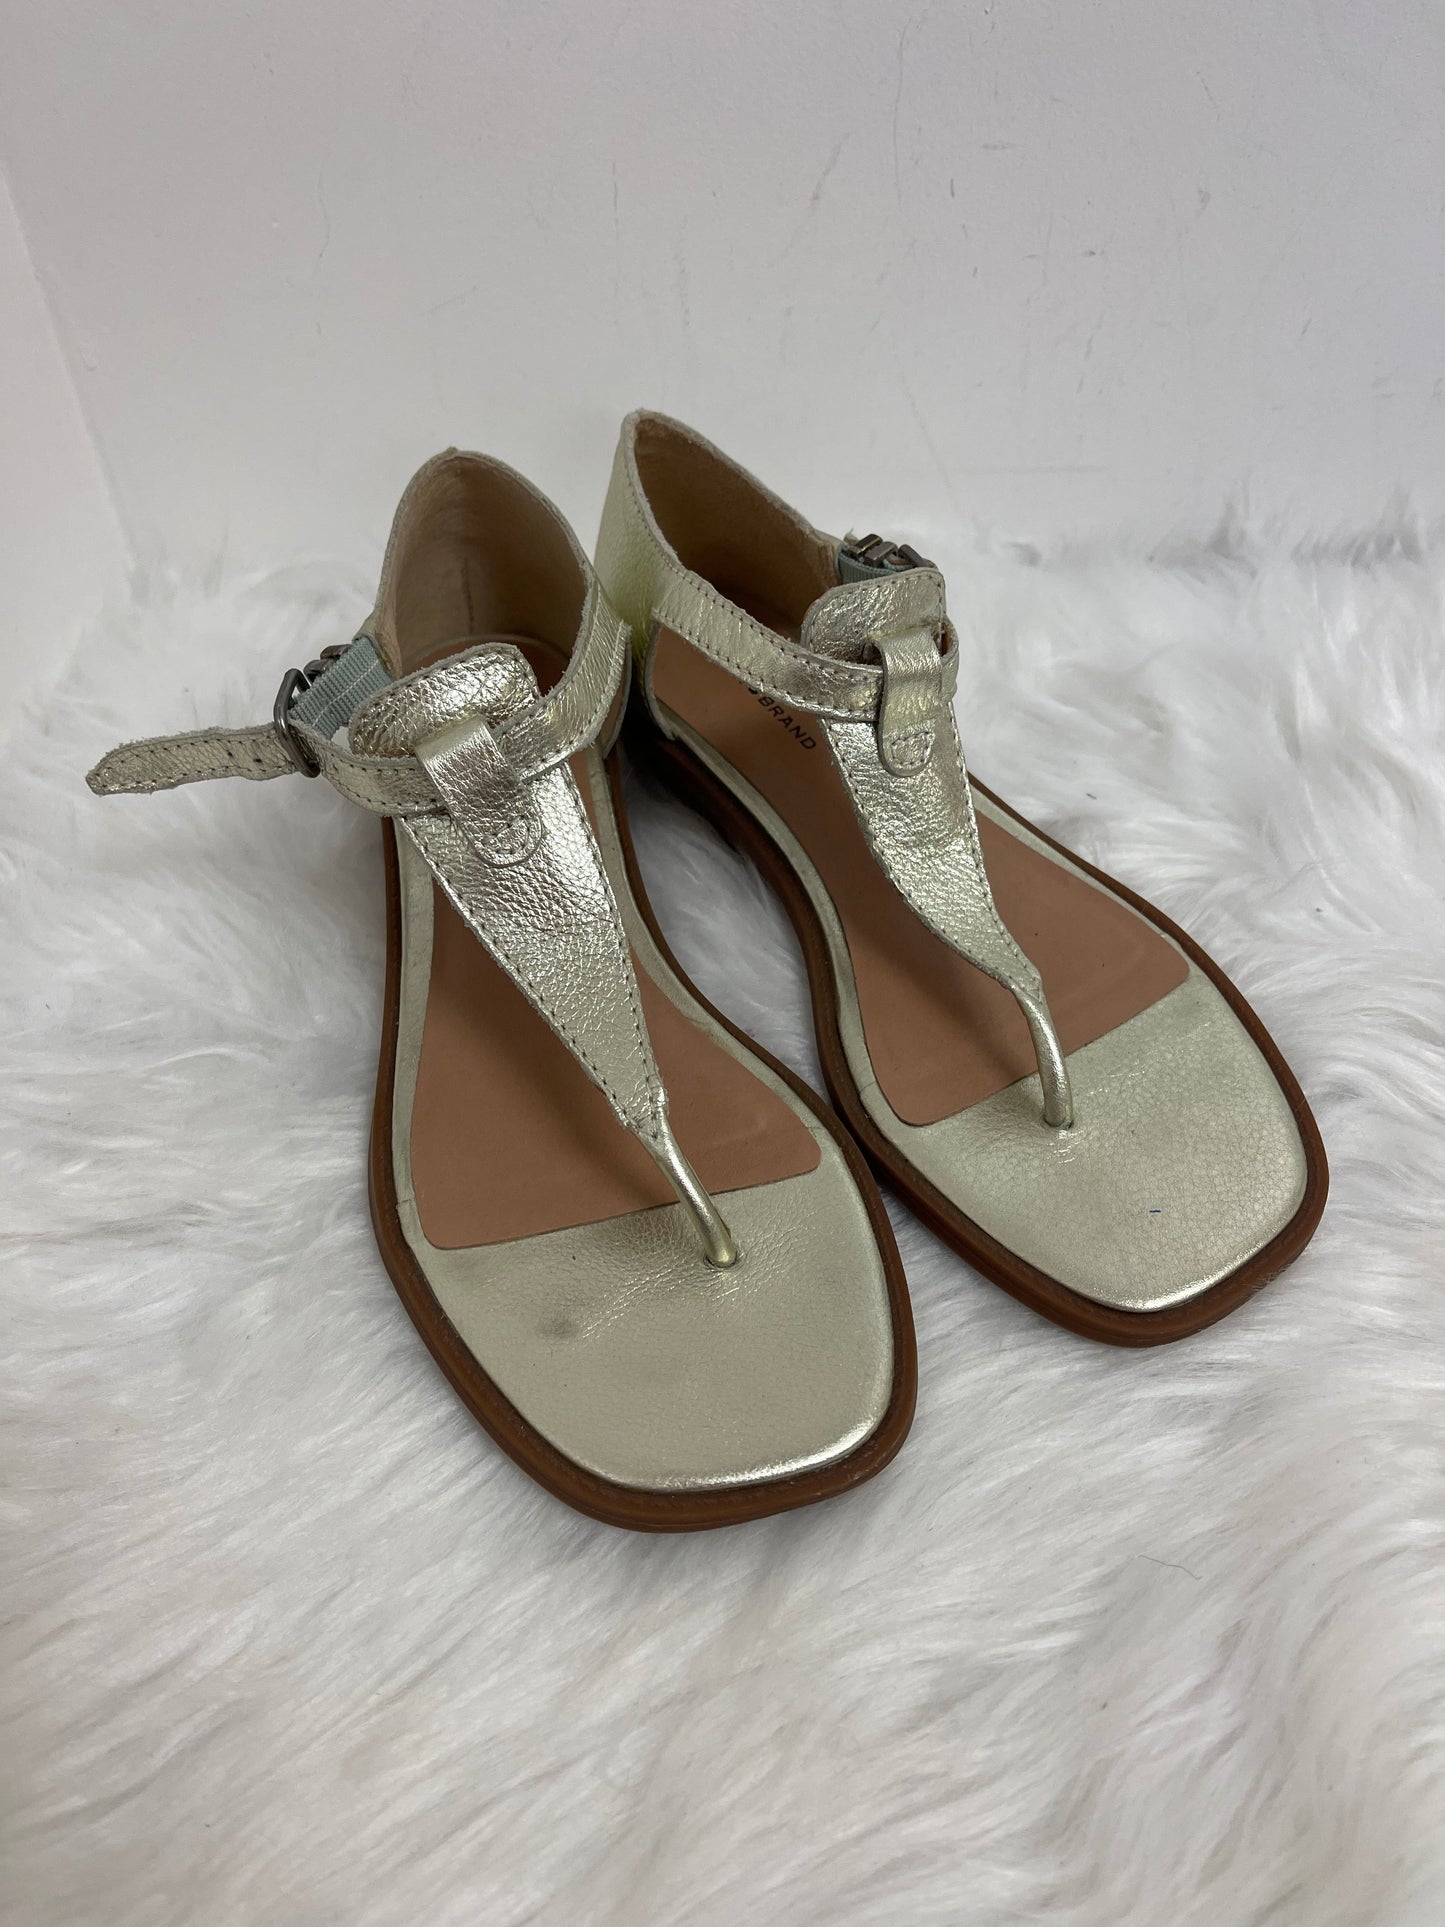 Gold Sandals Flats Lucky Brand, Size 8